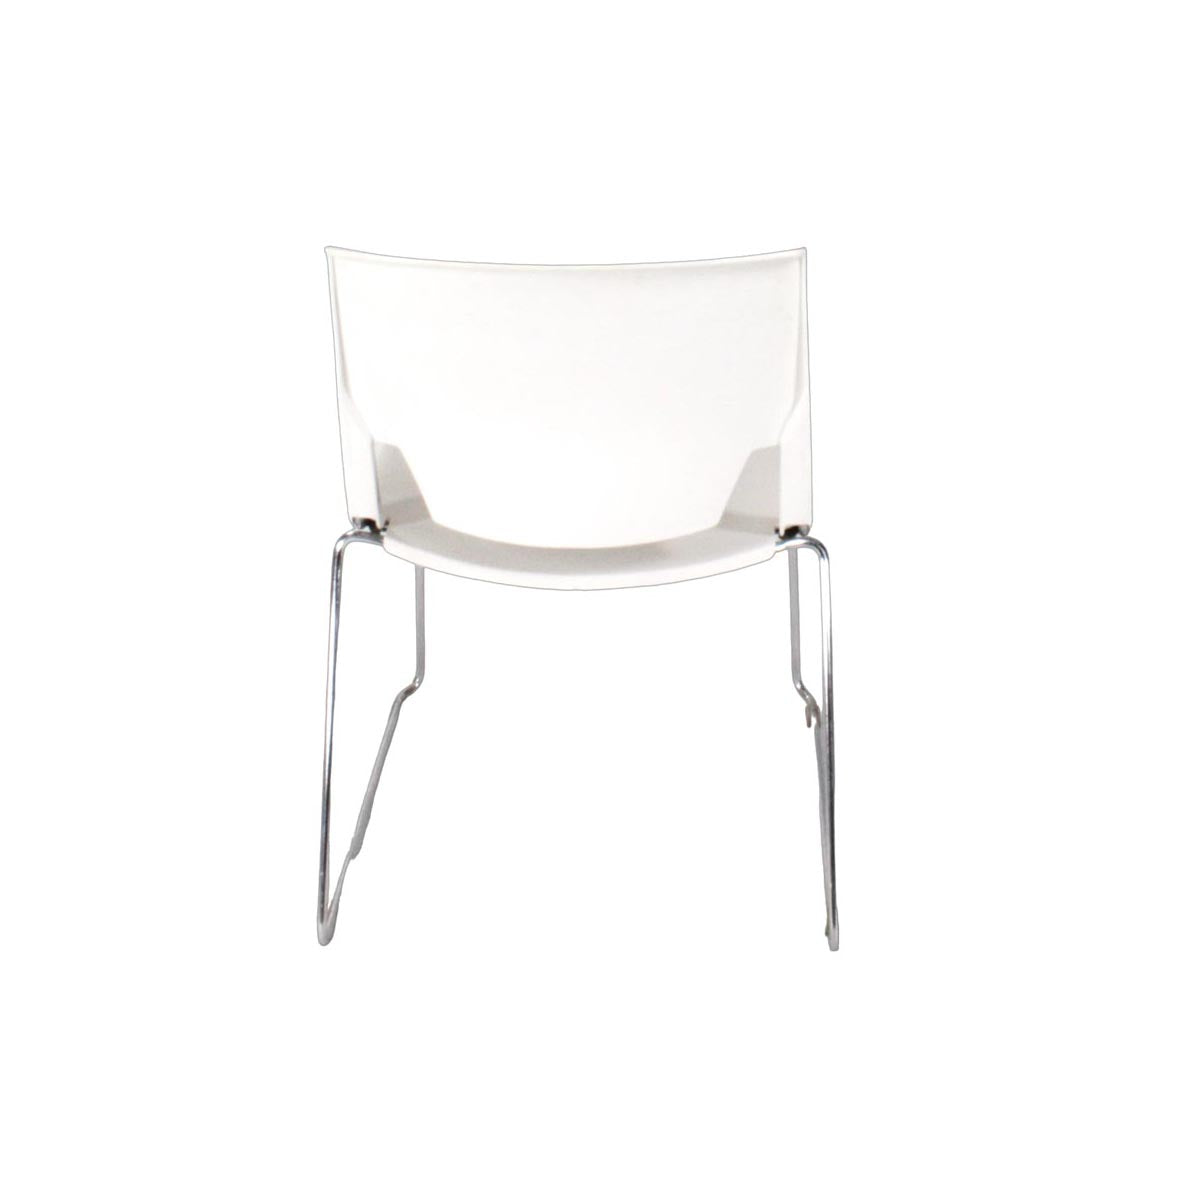 Haworth: Very Comforto 62 Chair in White - Refurbished